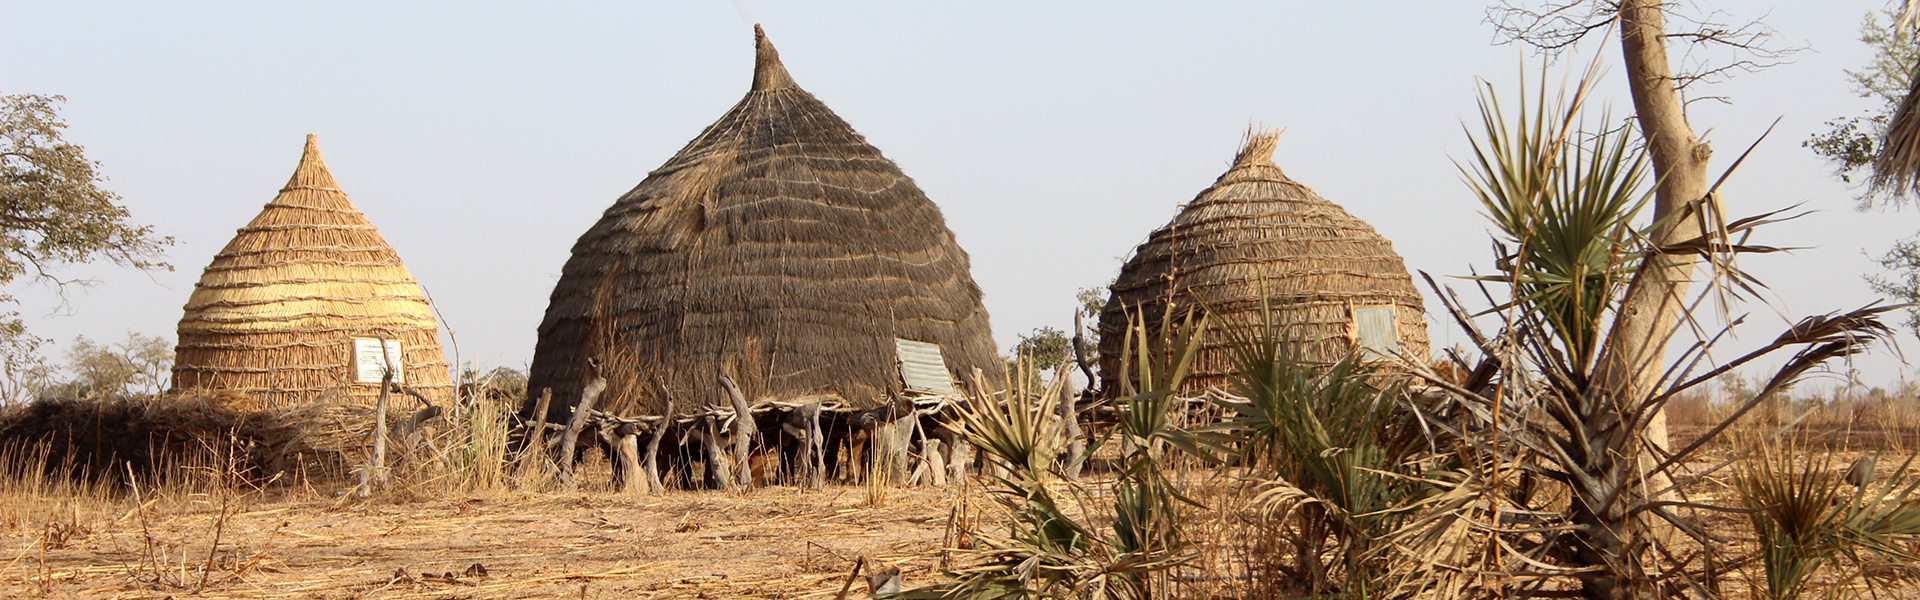 niger-village-huts